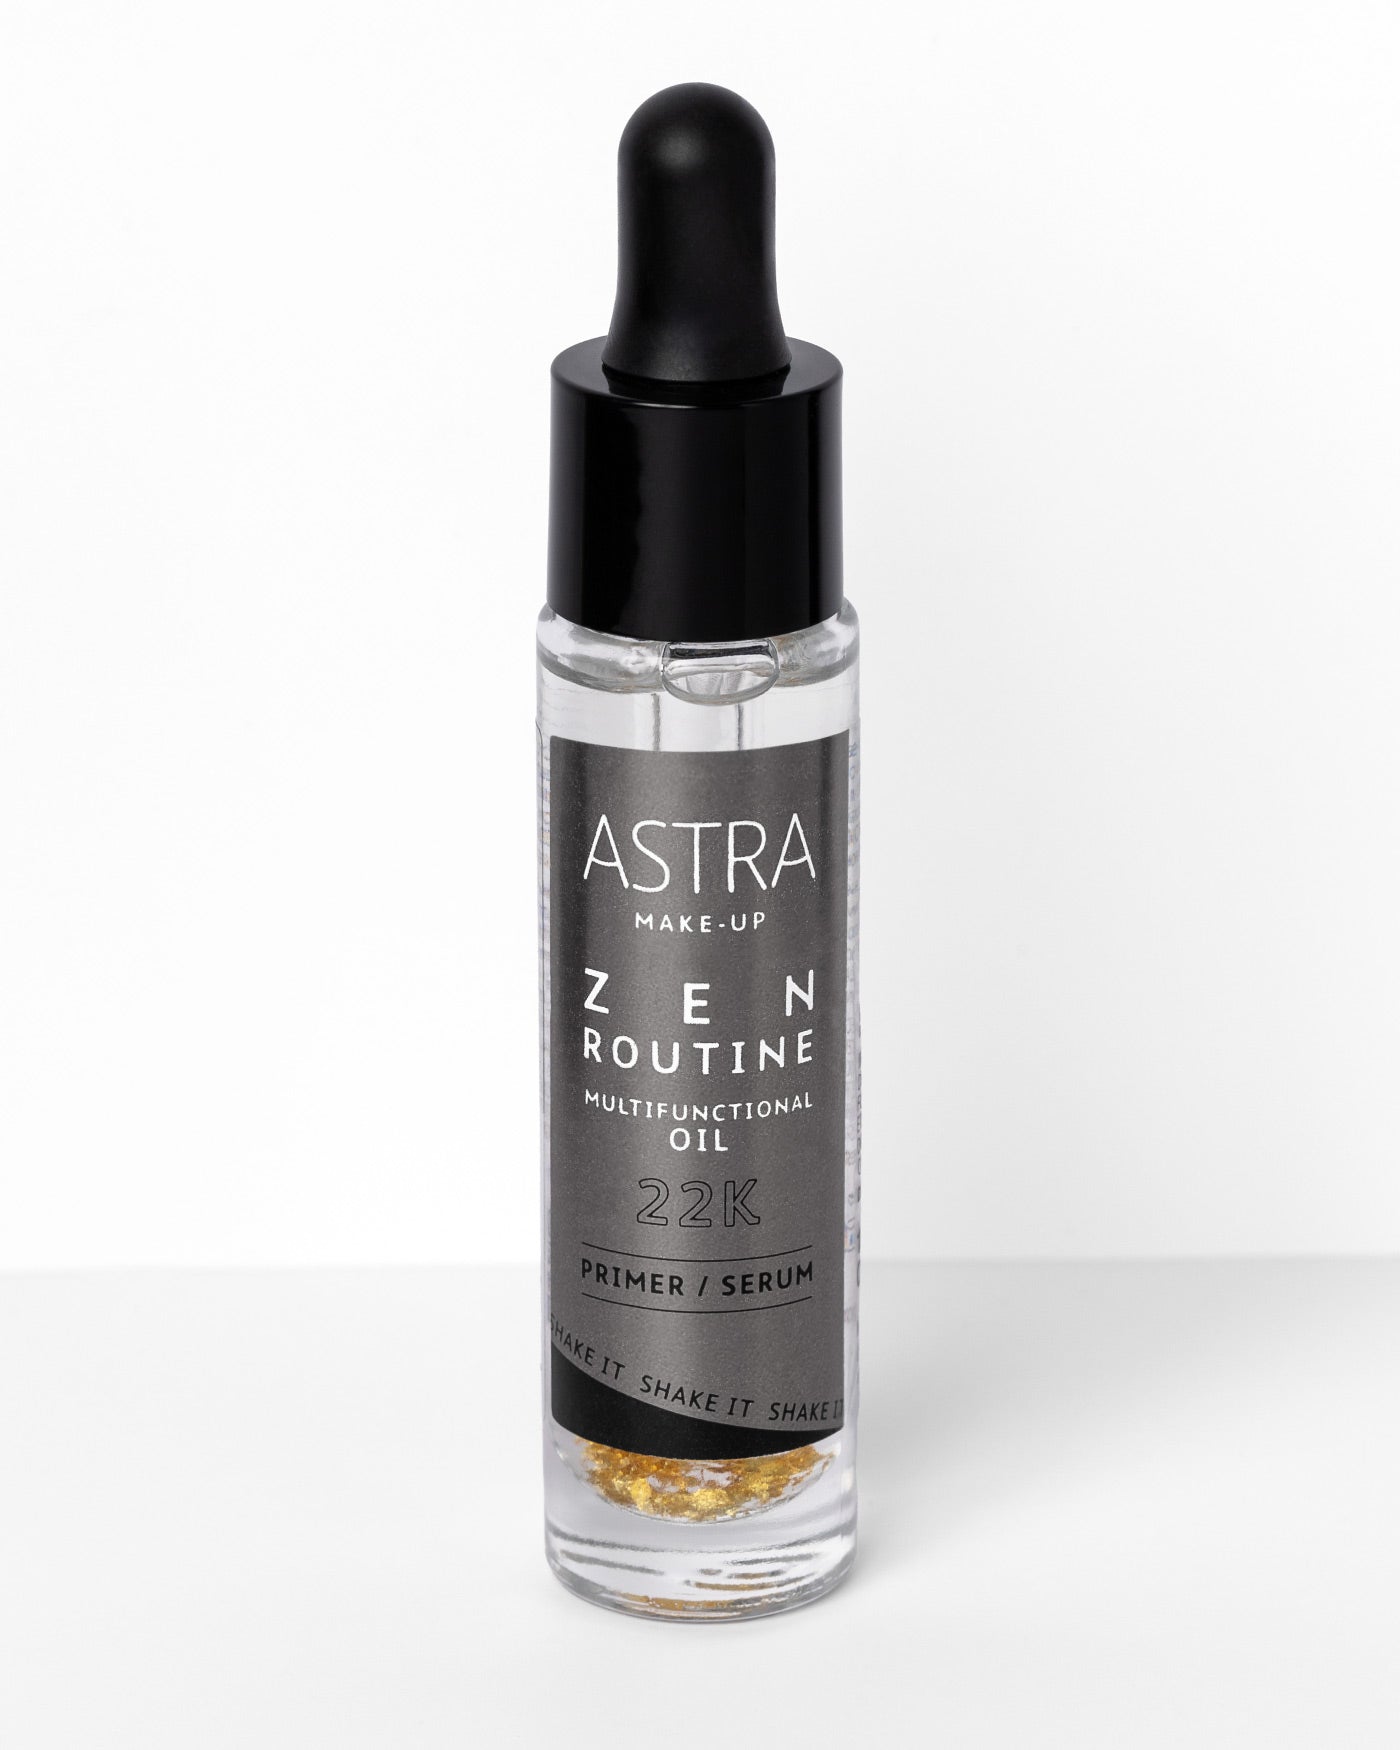 ZEN ROUTINE MULTIFUNCTIONAL OIL - Zen Routine - Astra Make-Up